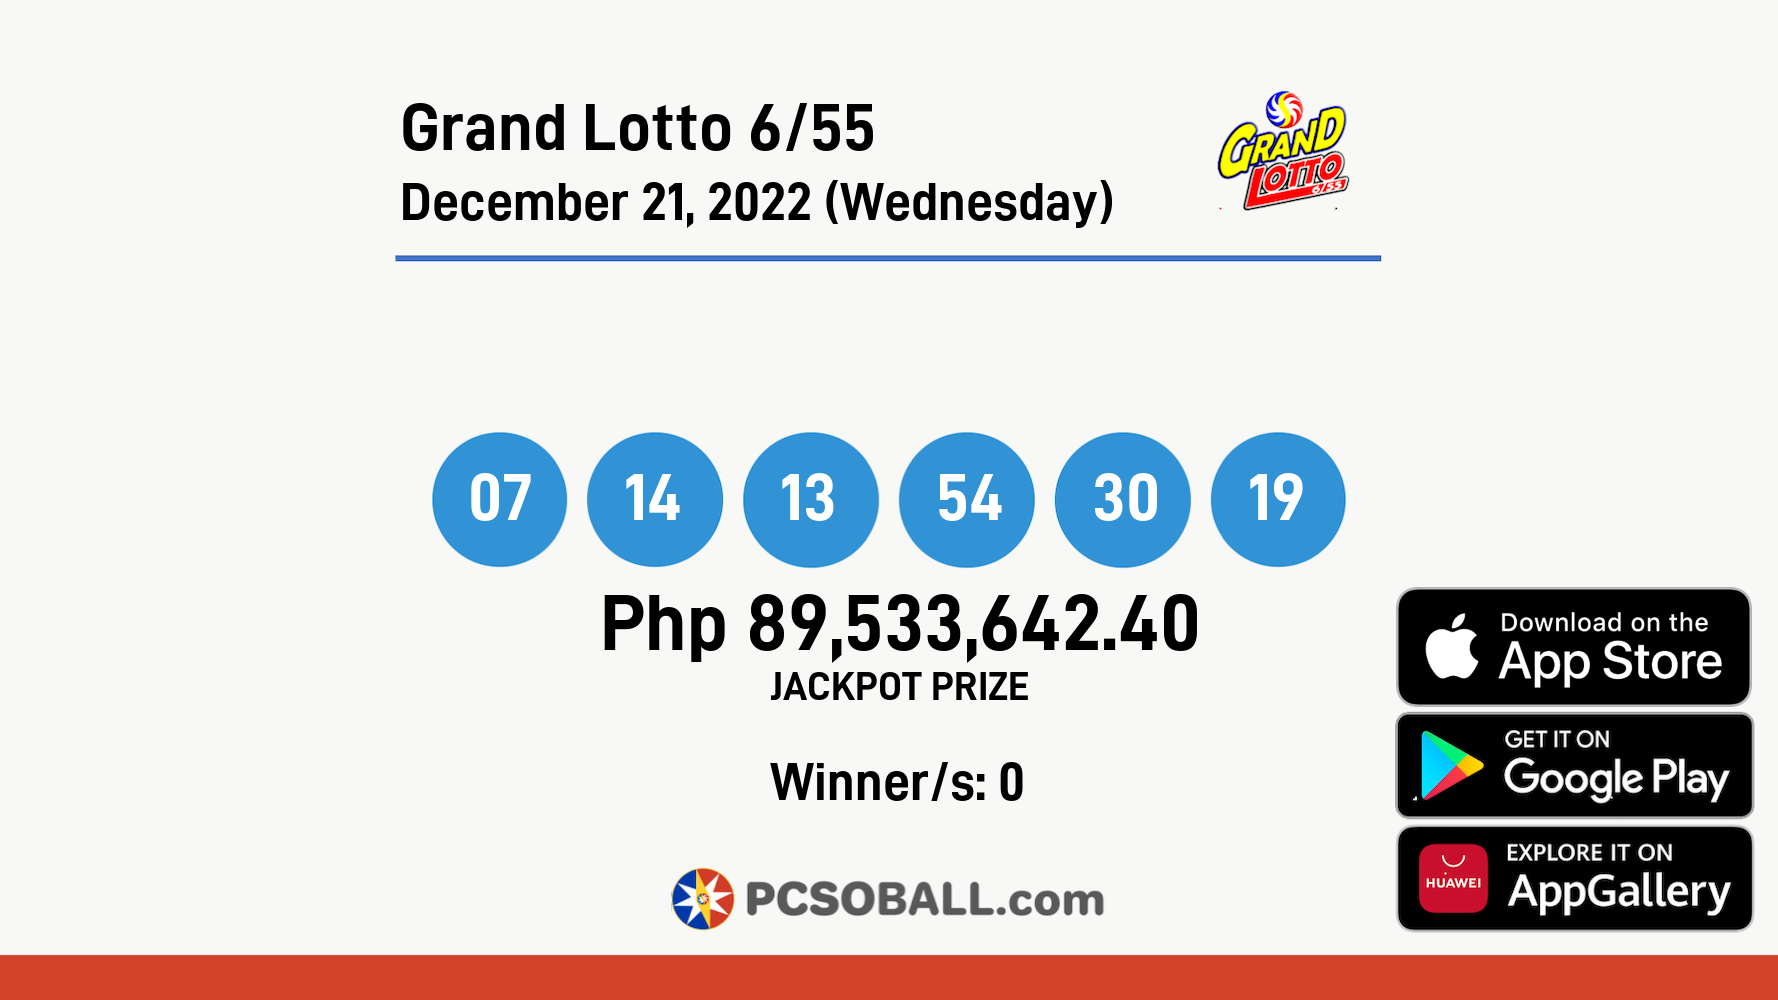 Grand Lotto 6/55 December 21, 2022 (Wednesday) Result